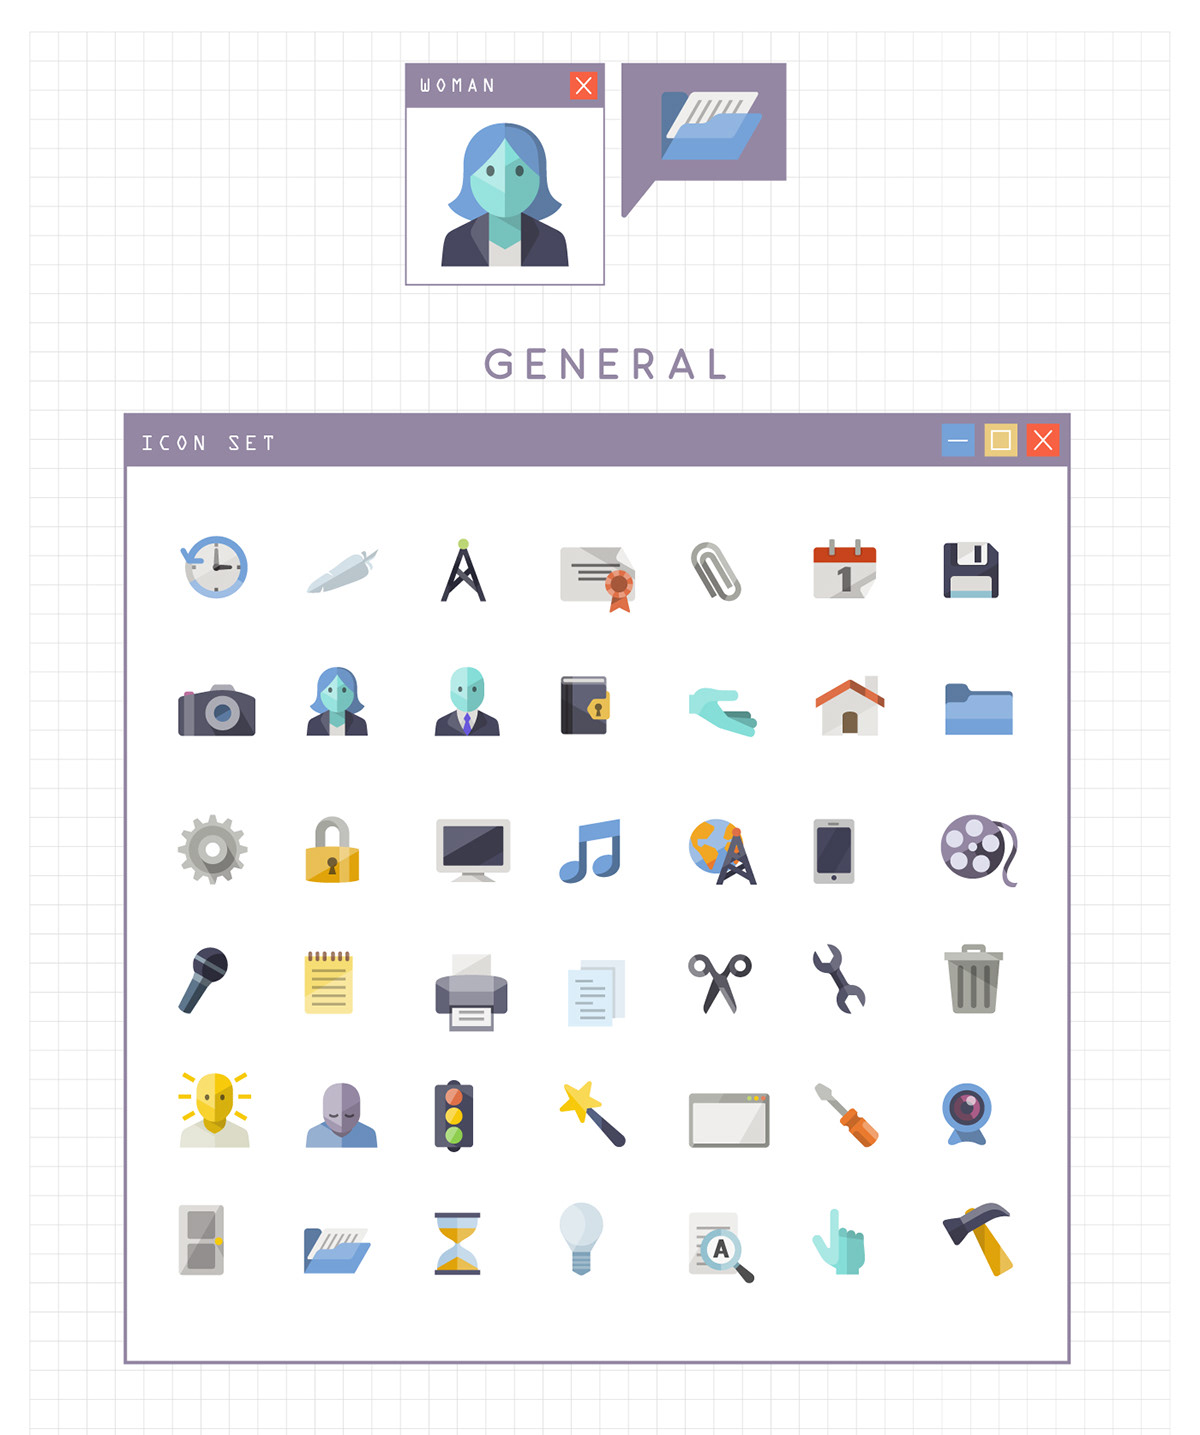 icons flat icon icon packs set icons general accounting communication business iconshock